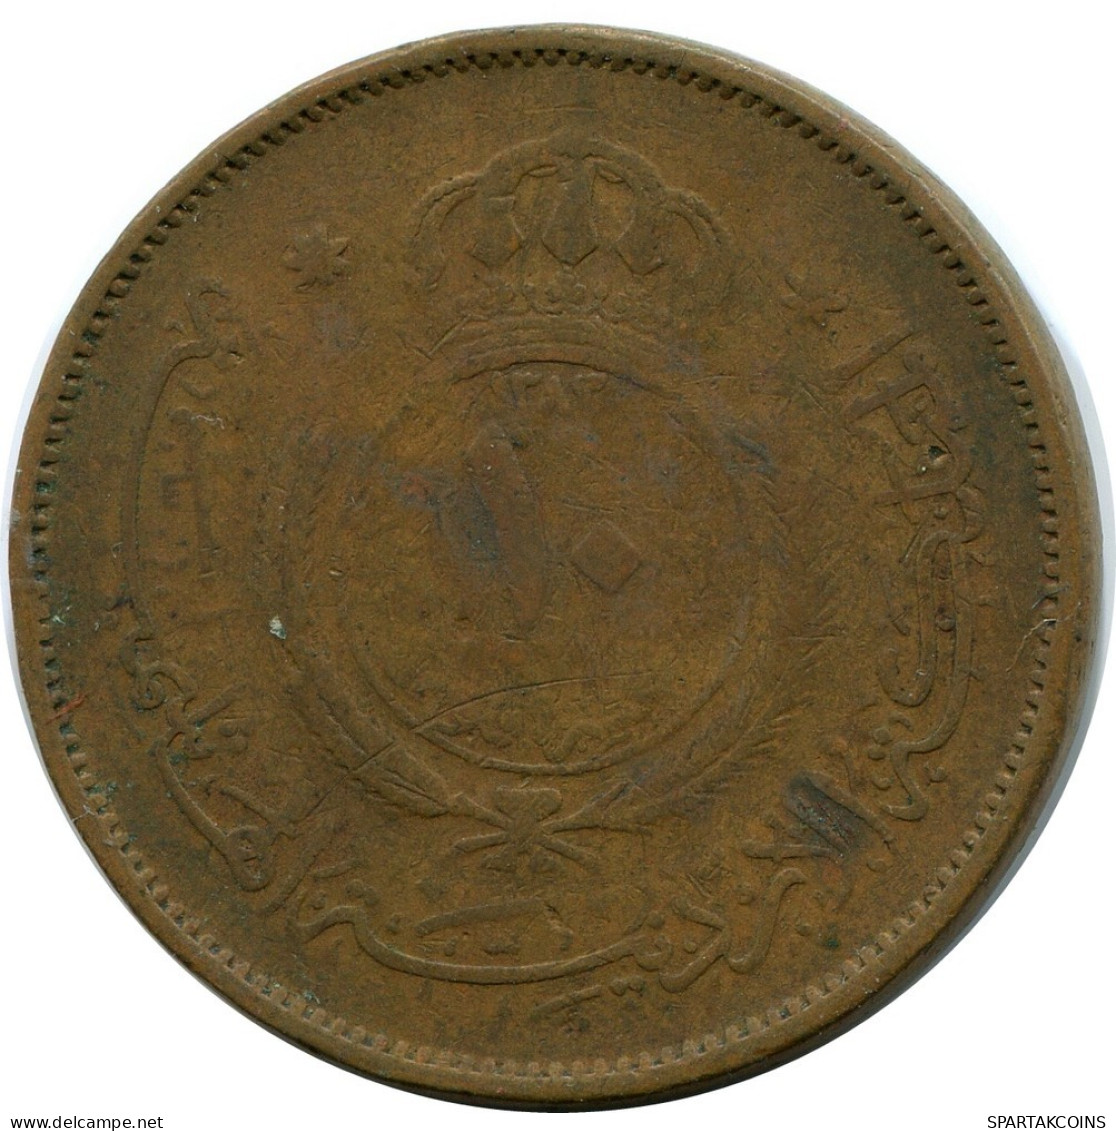 10 FILS 1964 JORDANIA JORDAN Moneda #AP111.E.A - Jordania